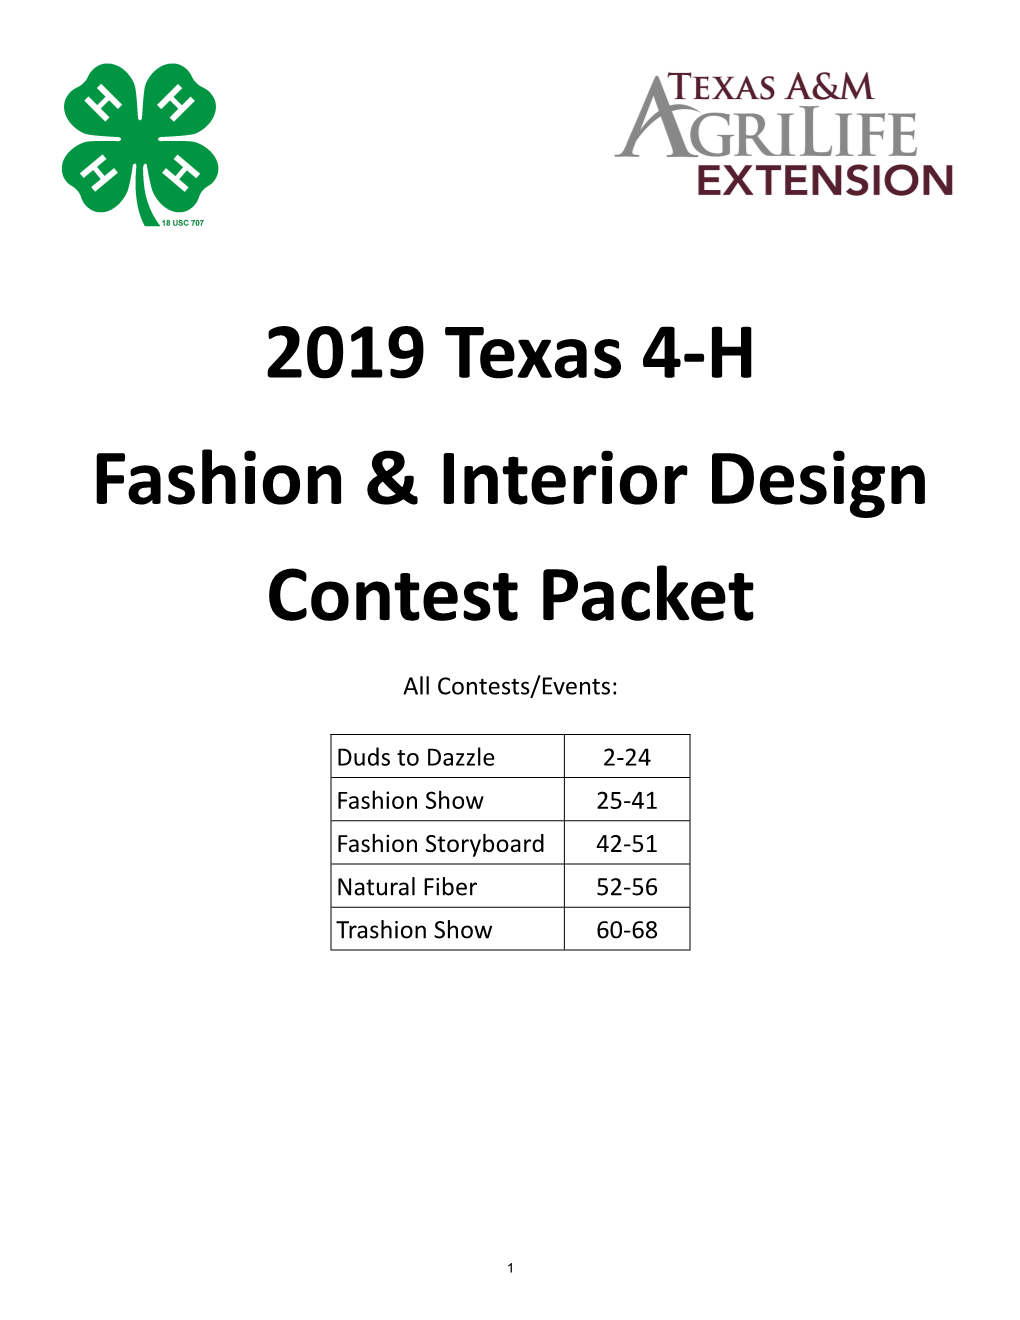 2019 Texas 4-H Fashion & Interior Design Contest Packet